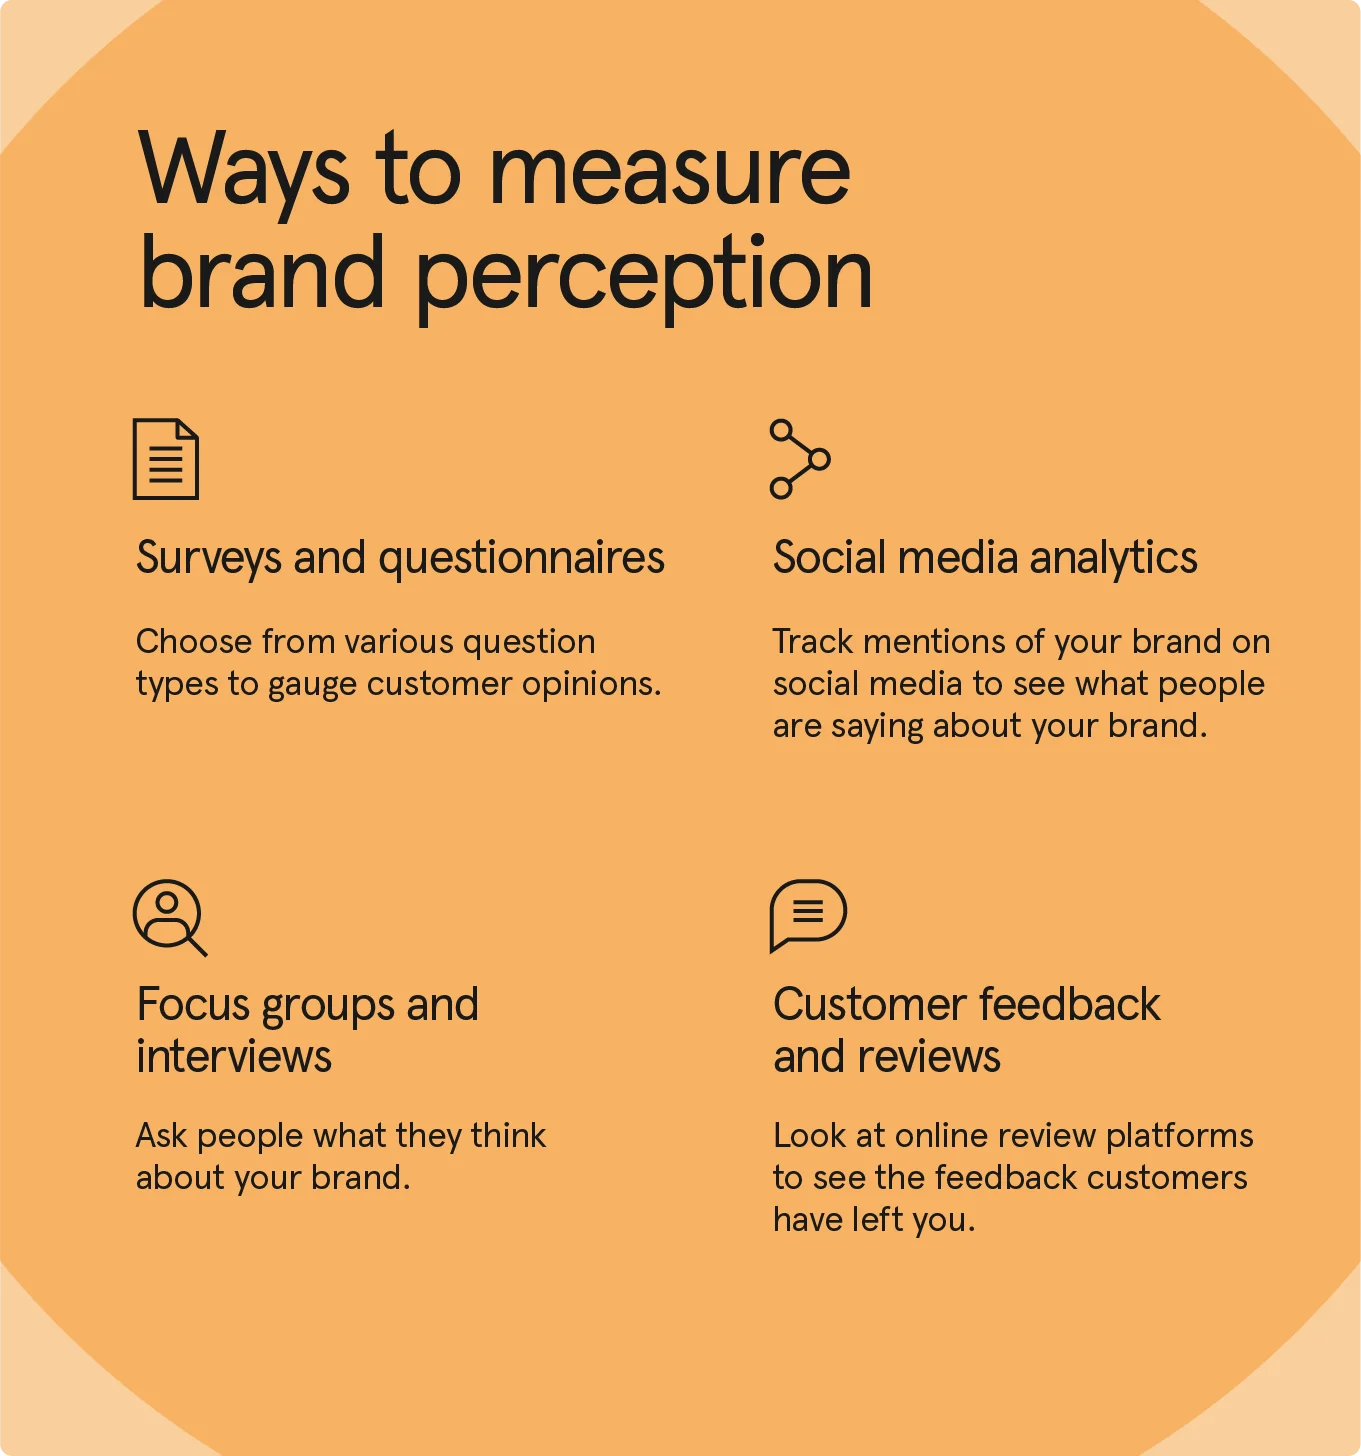 Image recaps the four ways to measure brand perception.